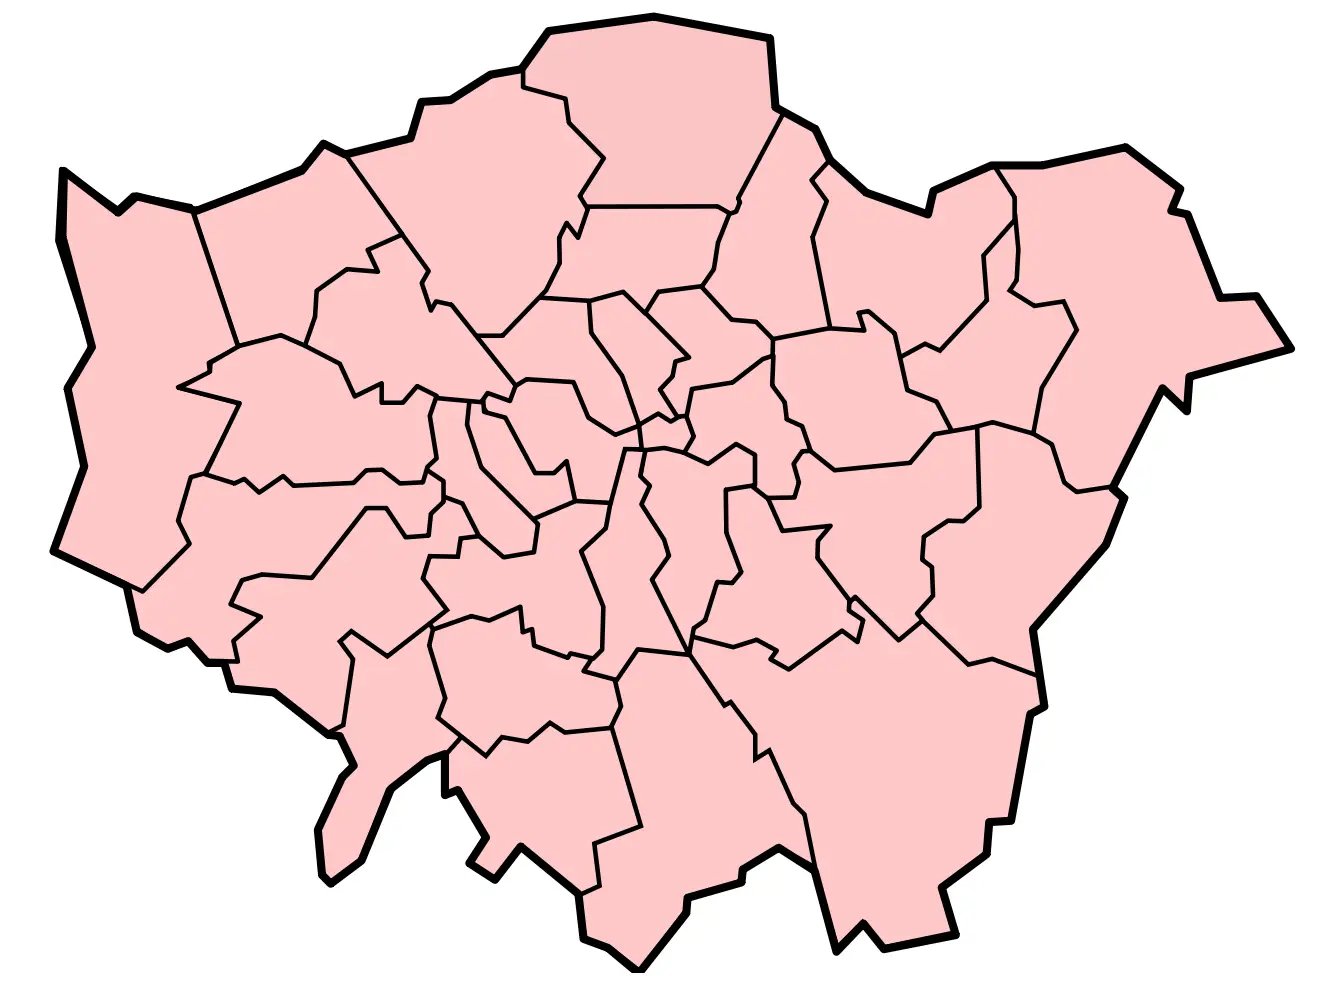 Boroughs Blank Map of London